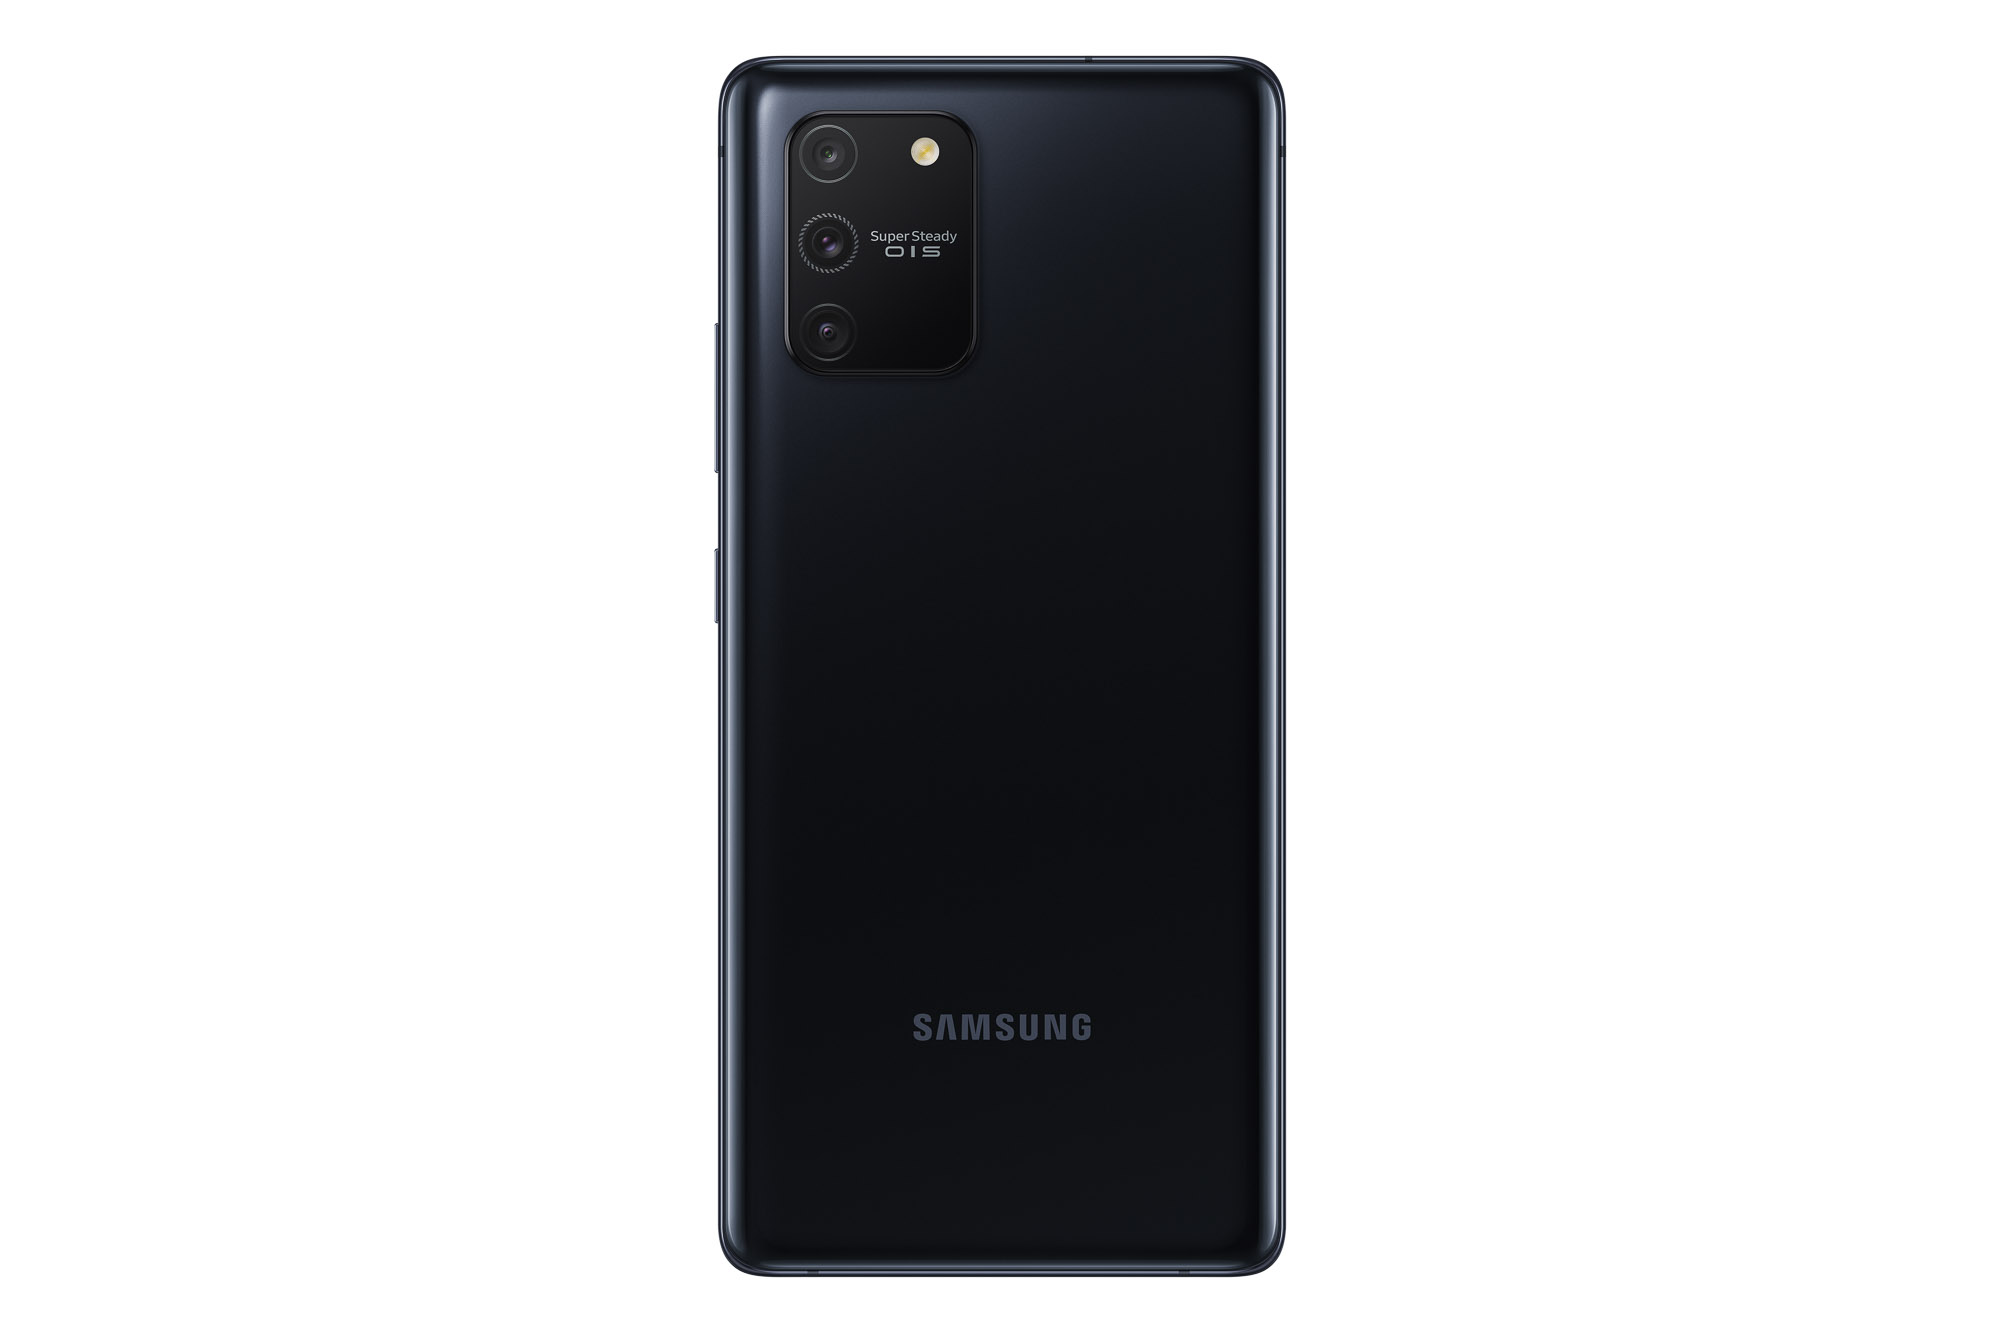 Samsung Galaxy S10 Lite and the Galaxy Tab S6 Lite.